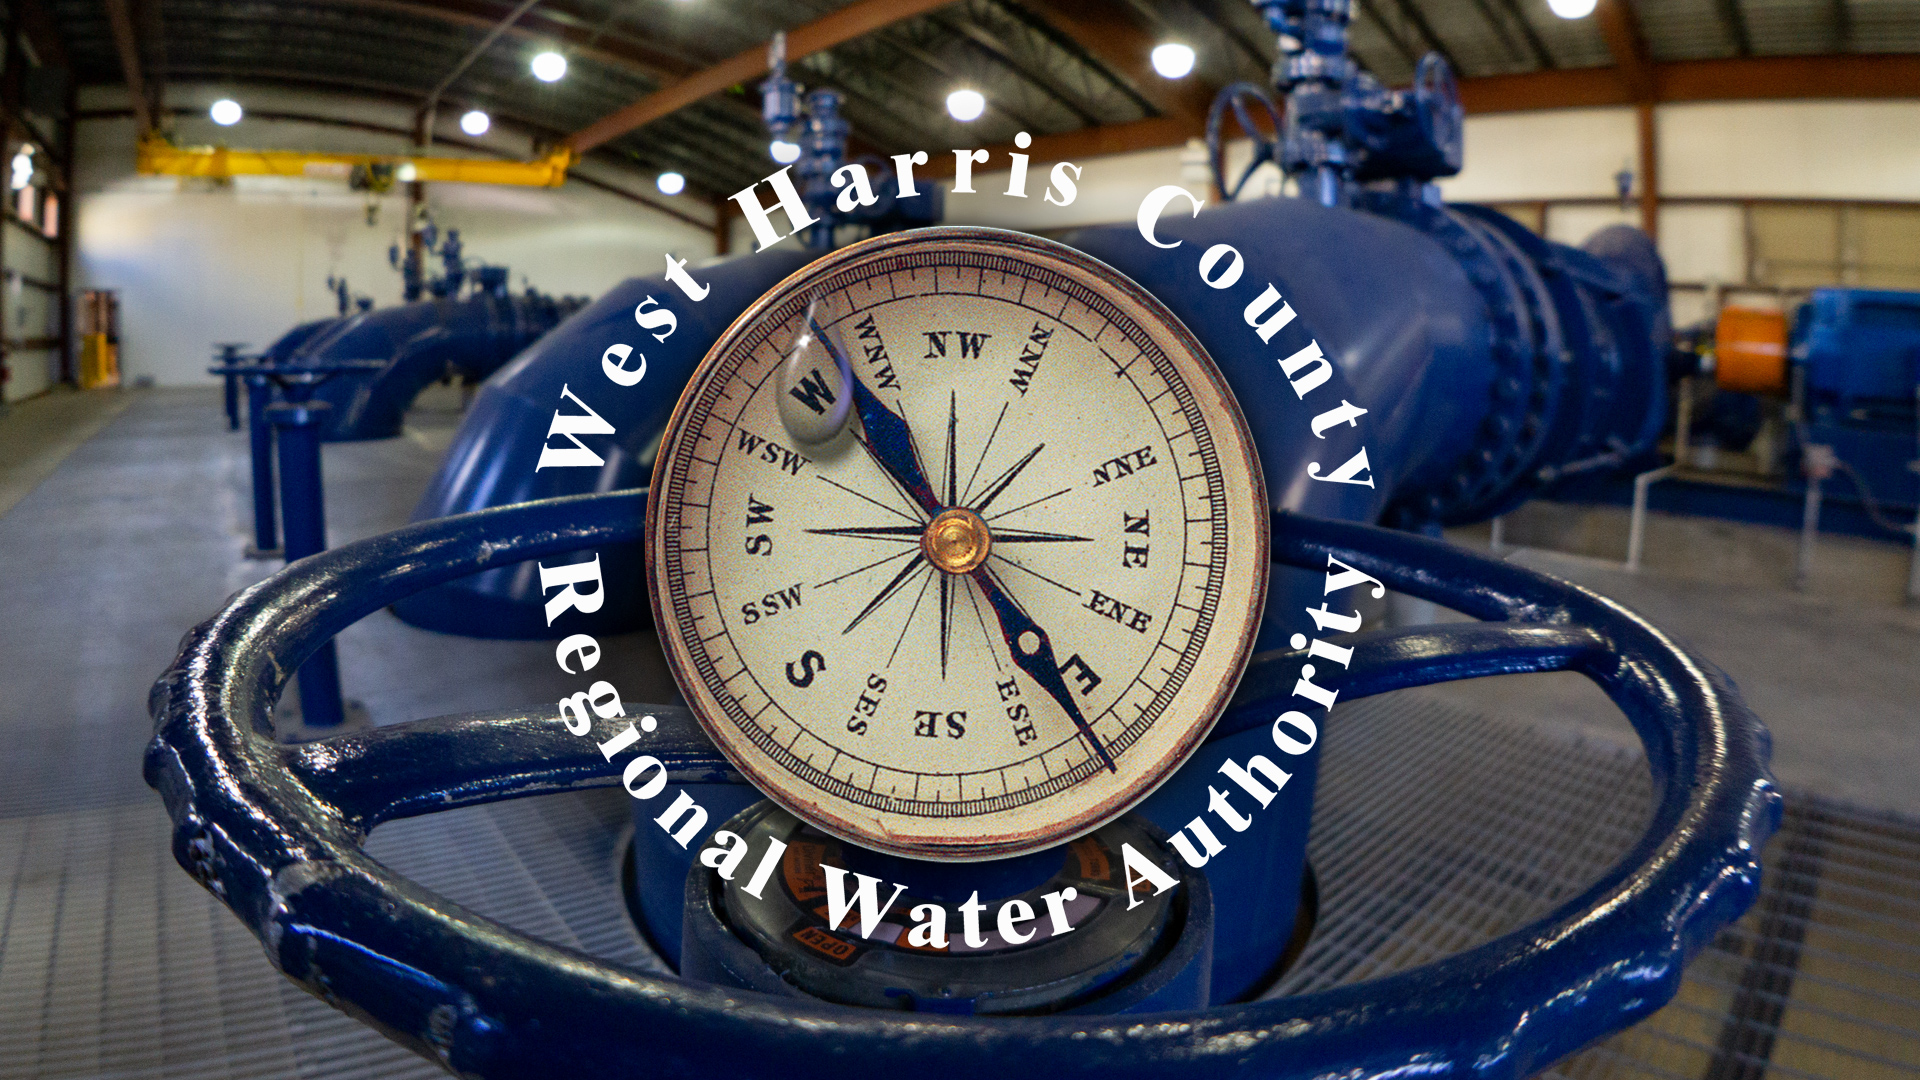 West Harris County Regional Water Authority